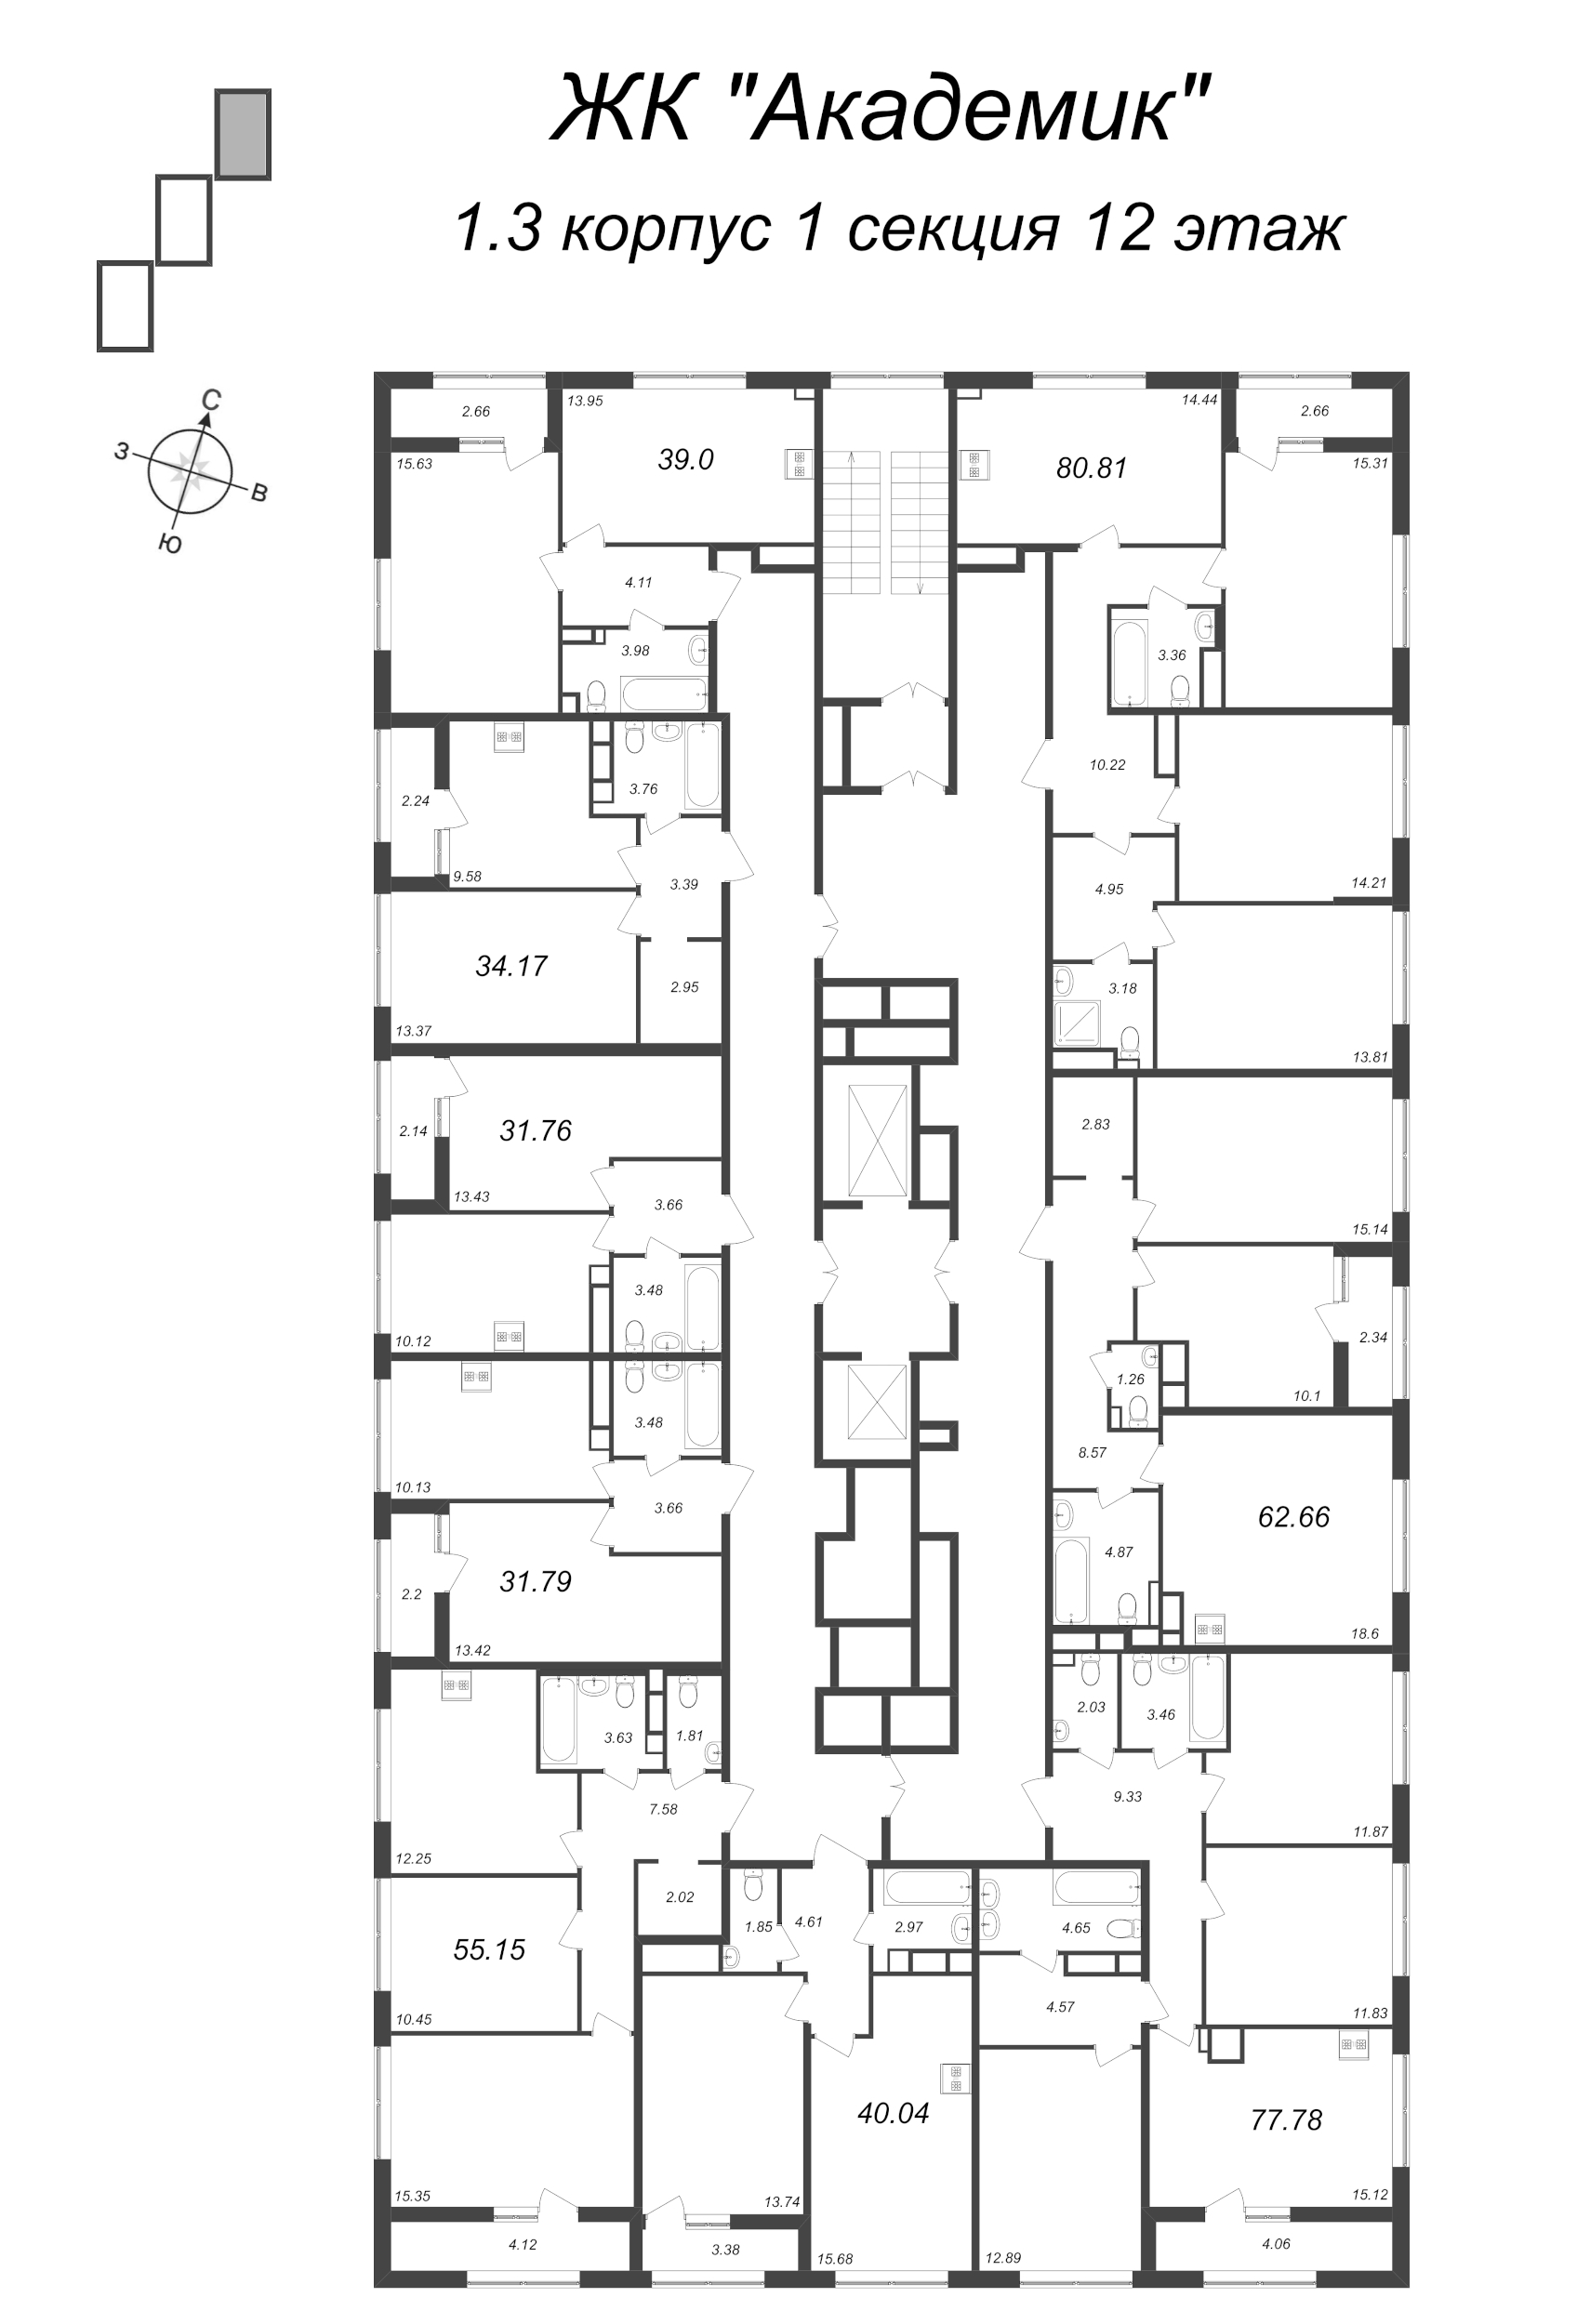 4-комнатная (Евро) квартира, 77.78 м² - планировка этажа